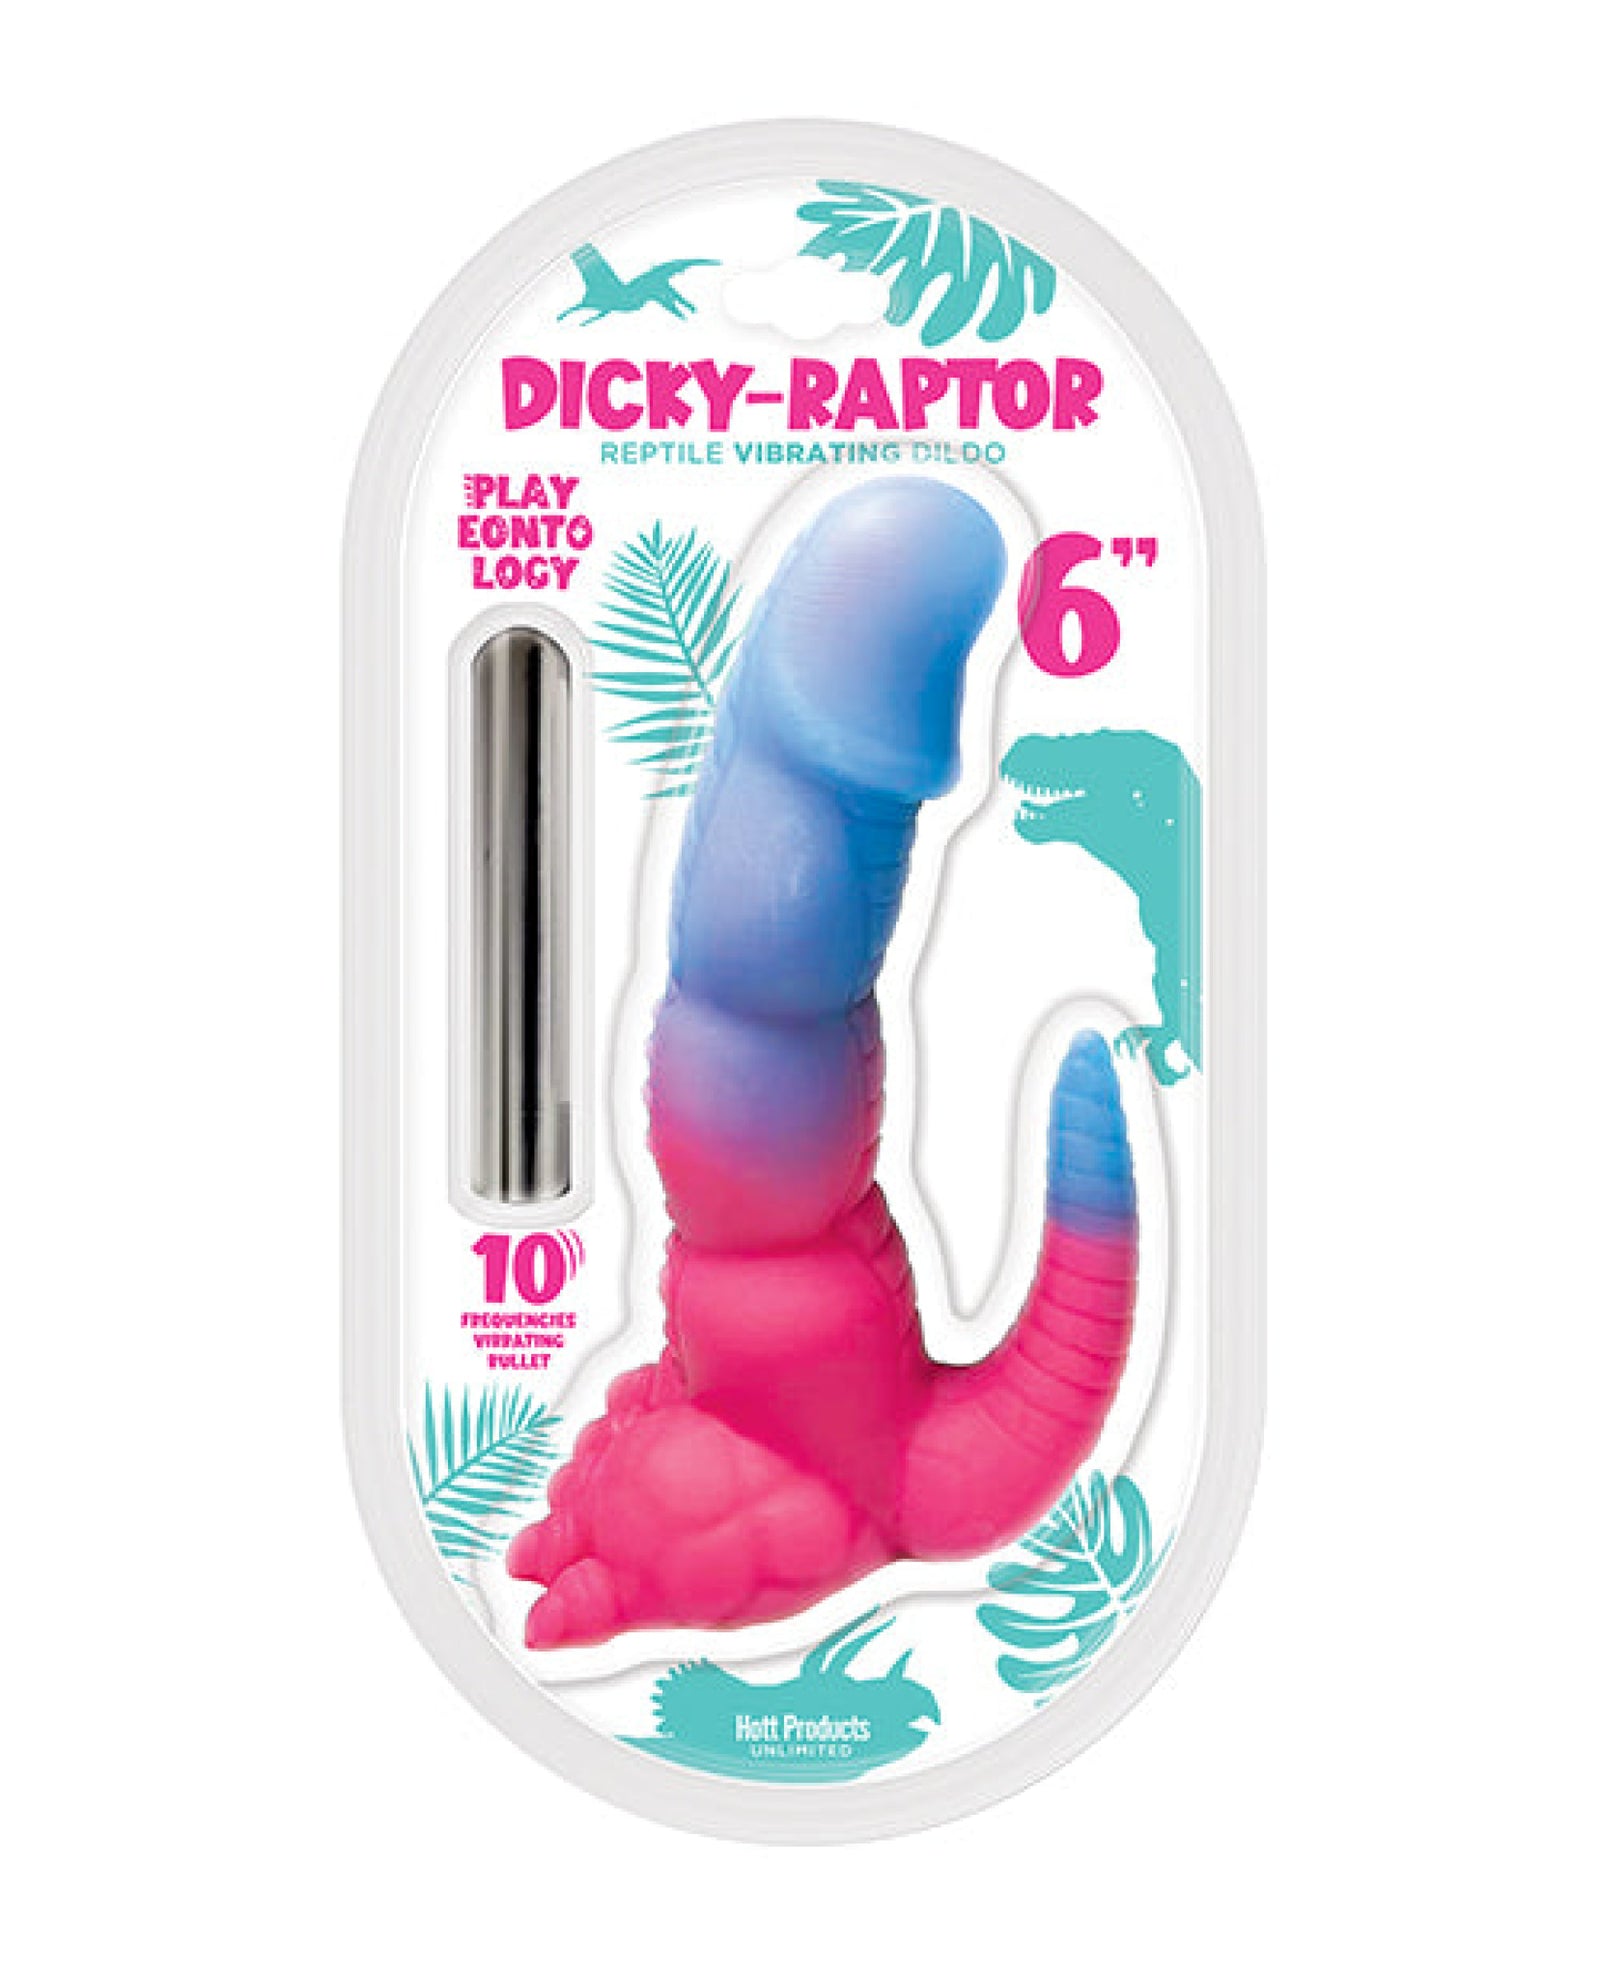 Playeontology Vibrating Series Dicky-Raptor Hott Products